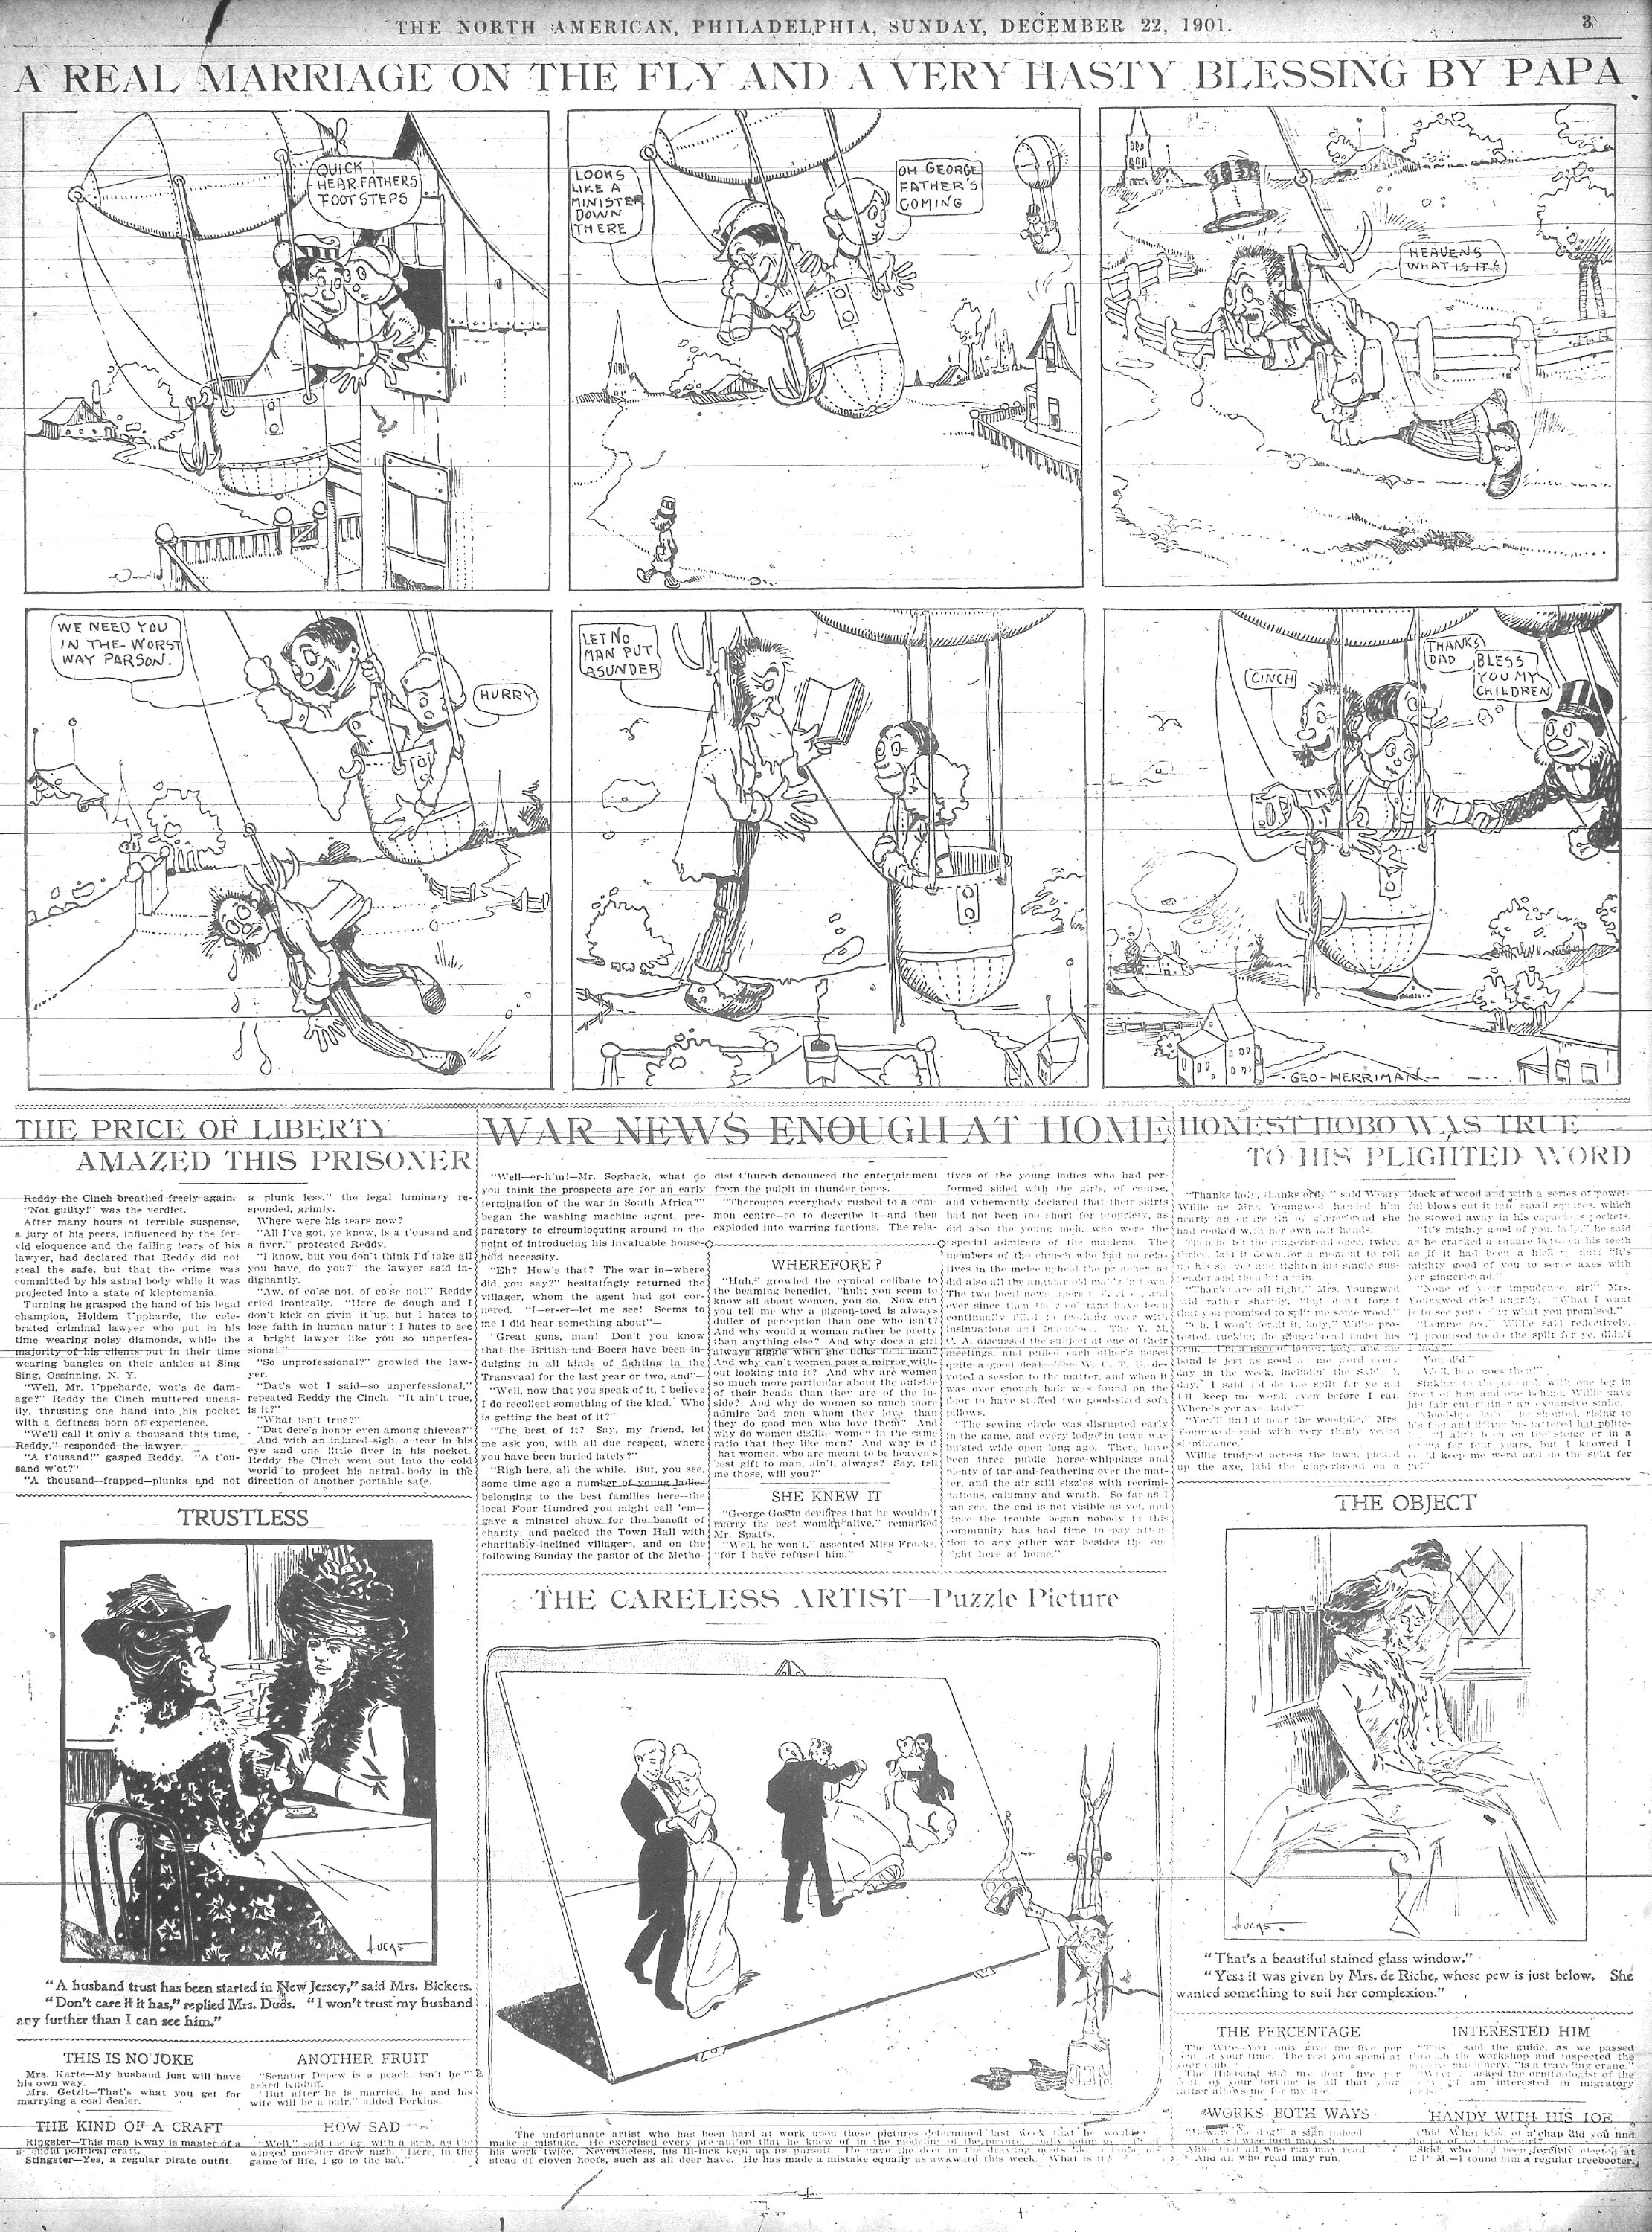 05-phillyna-12-22-1901-herriman-comic.jpg